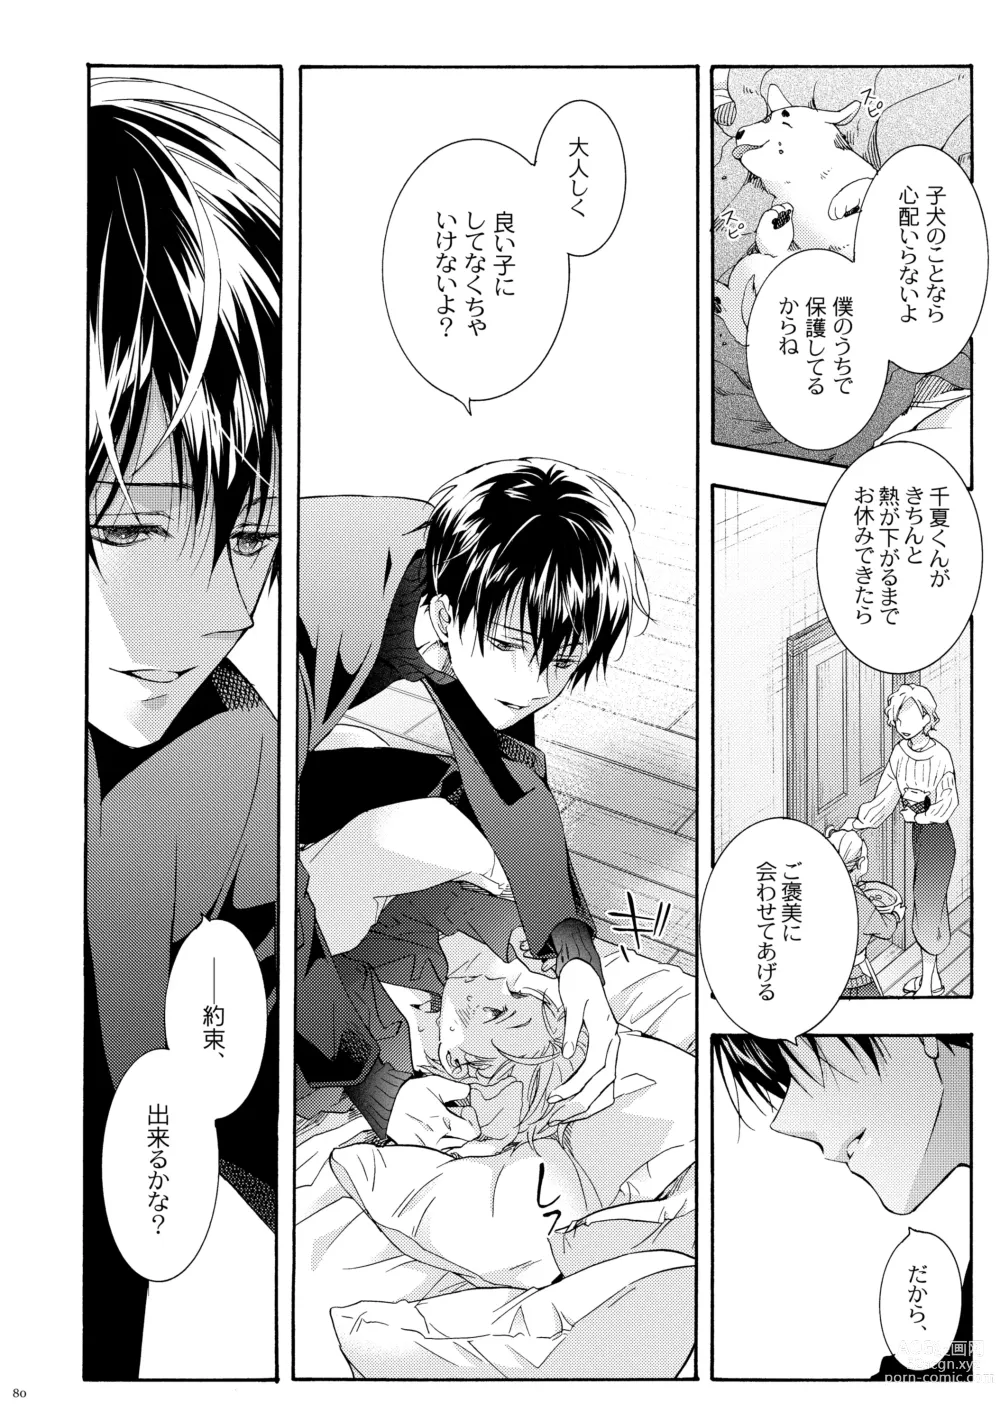 Page 79 of manga Boku no Tame no Omega